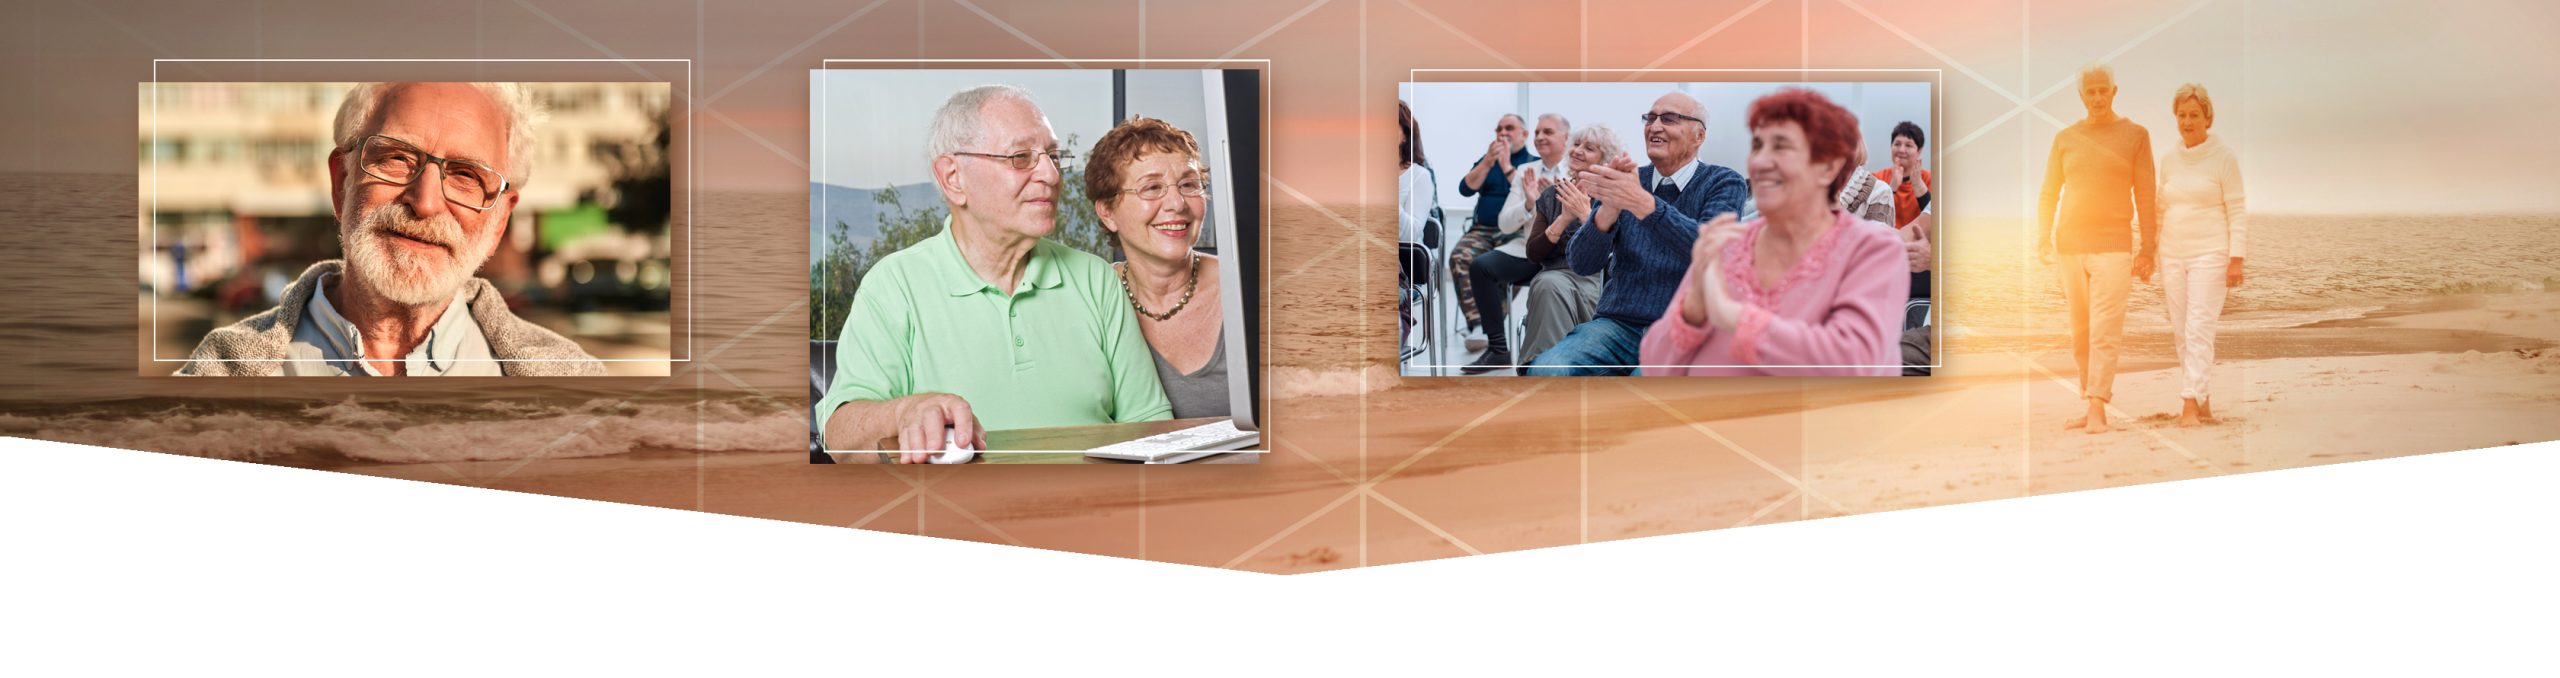 photos of senior citizens enjoying life